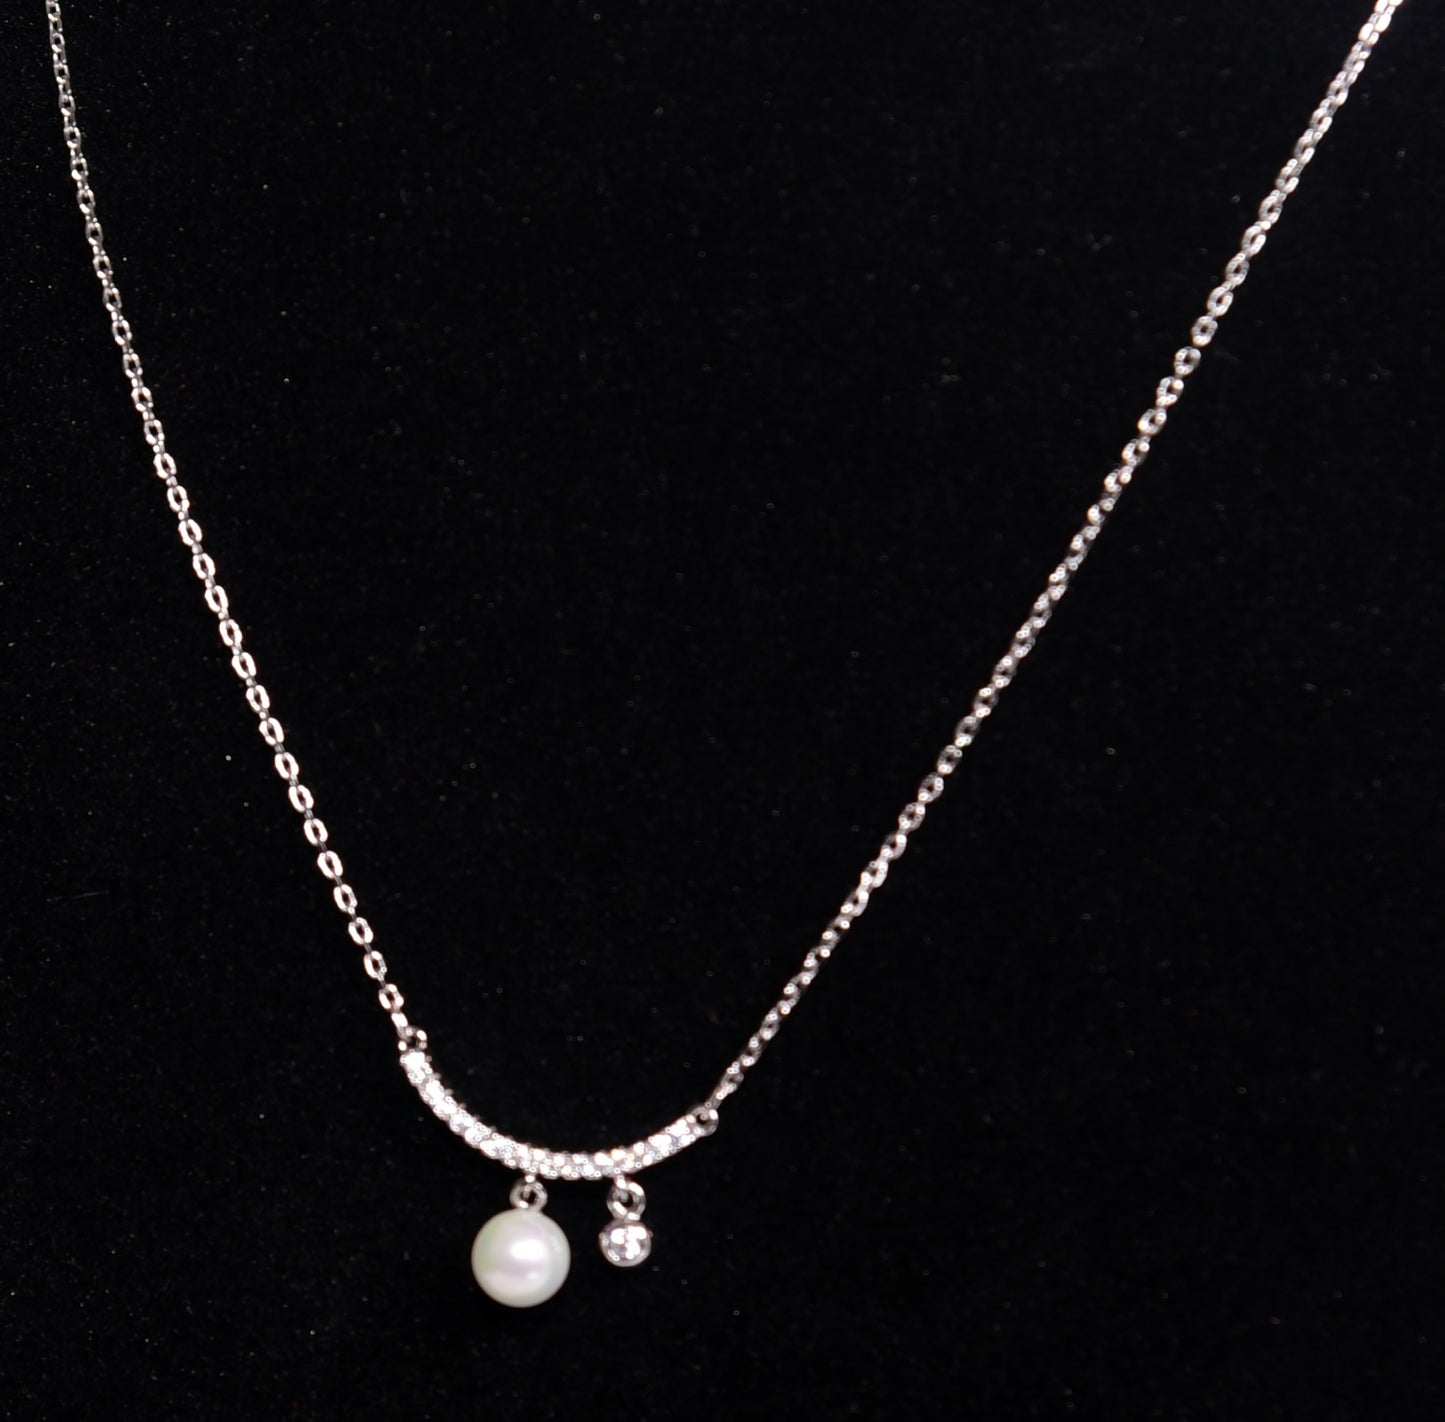 Silver Chain | Half Moon Pendant | 925 Rhodium Silver | Women's Chain - Indique